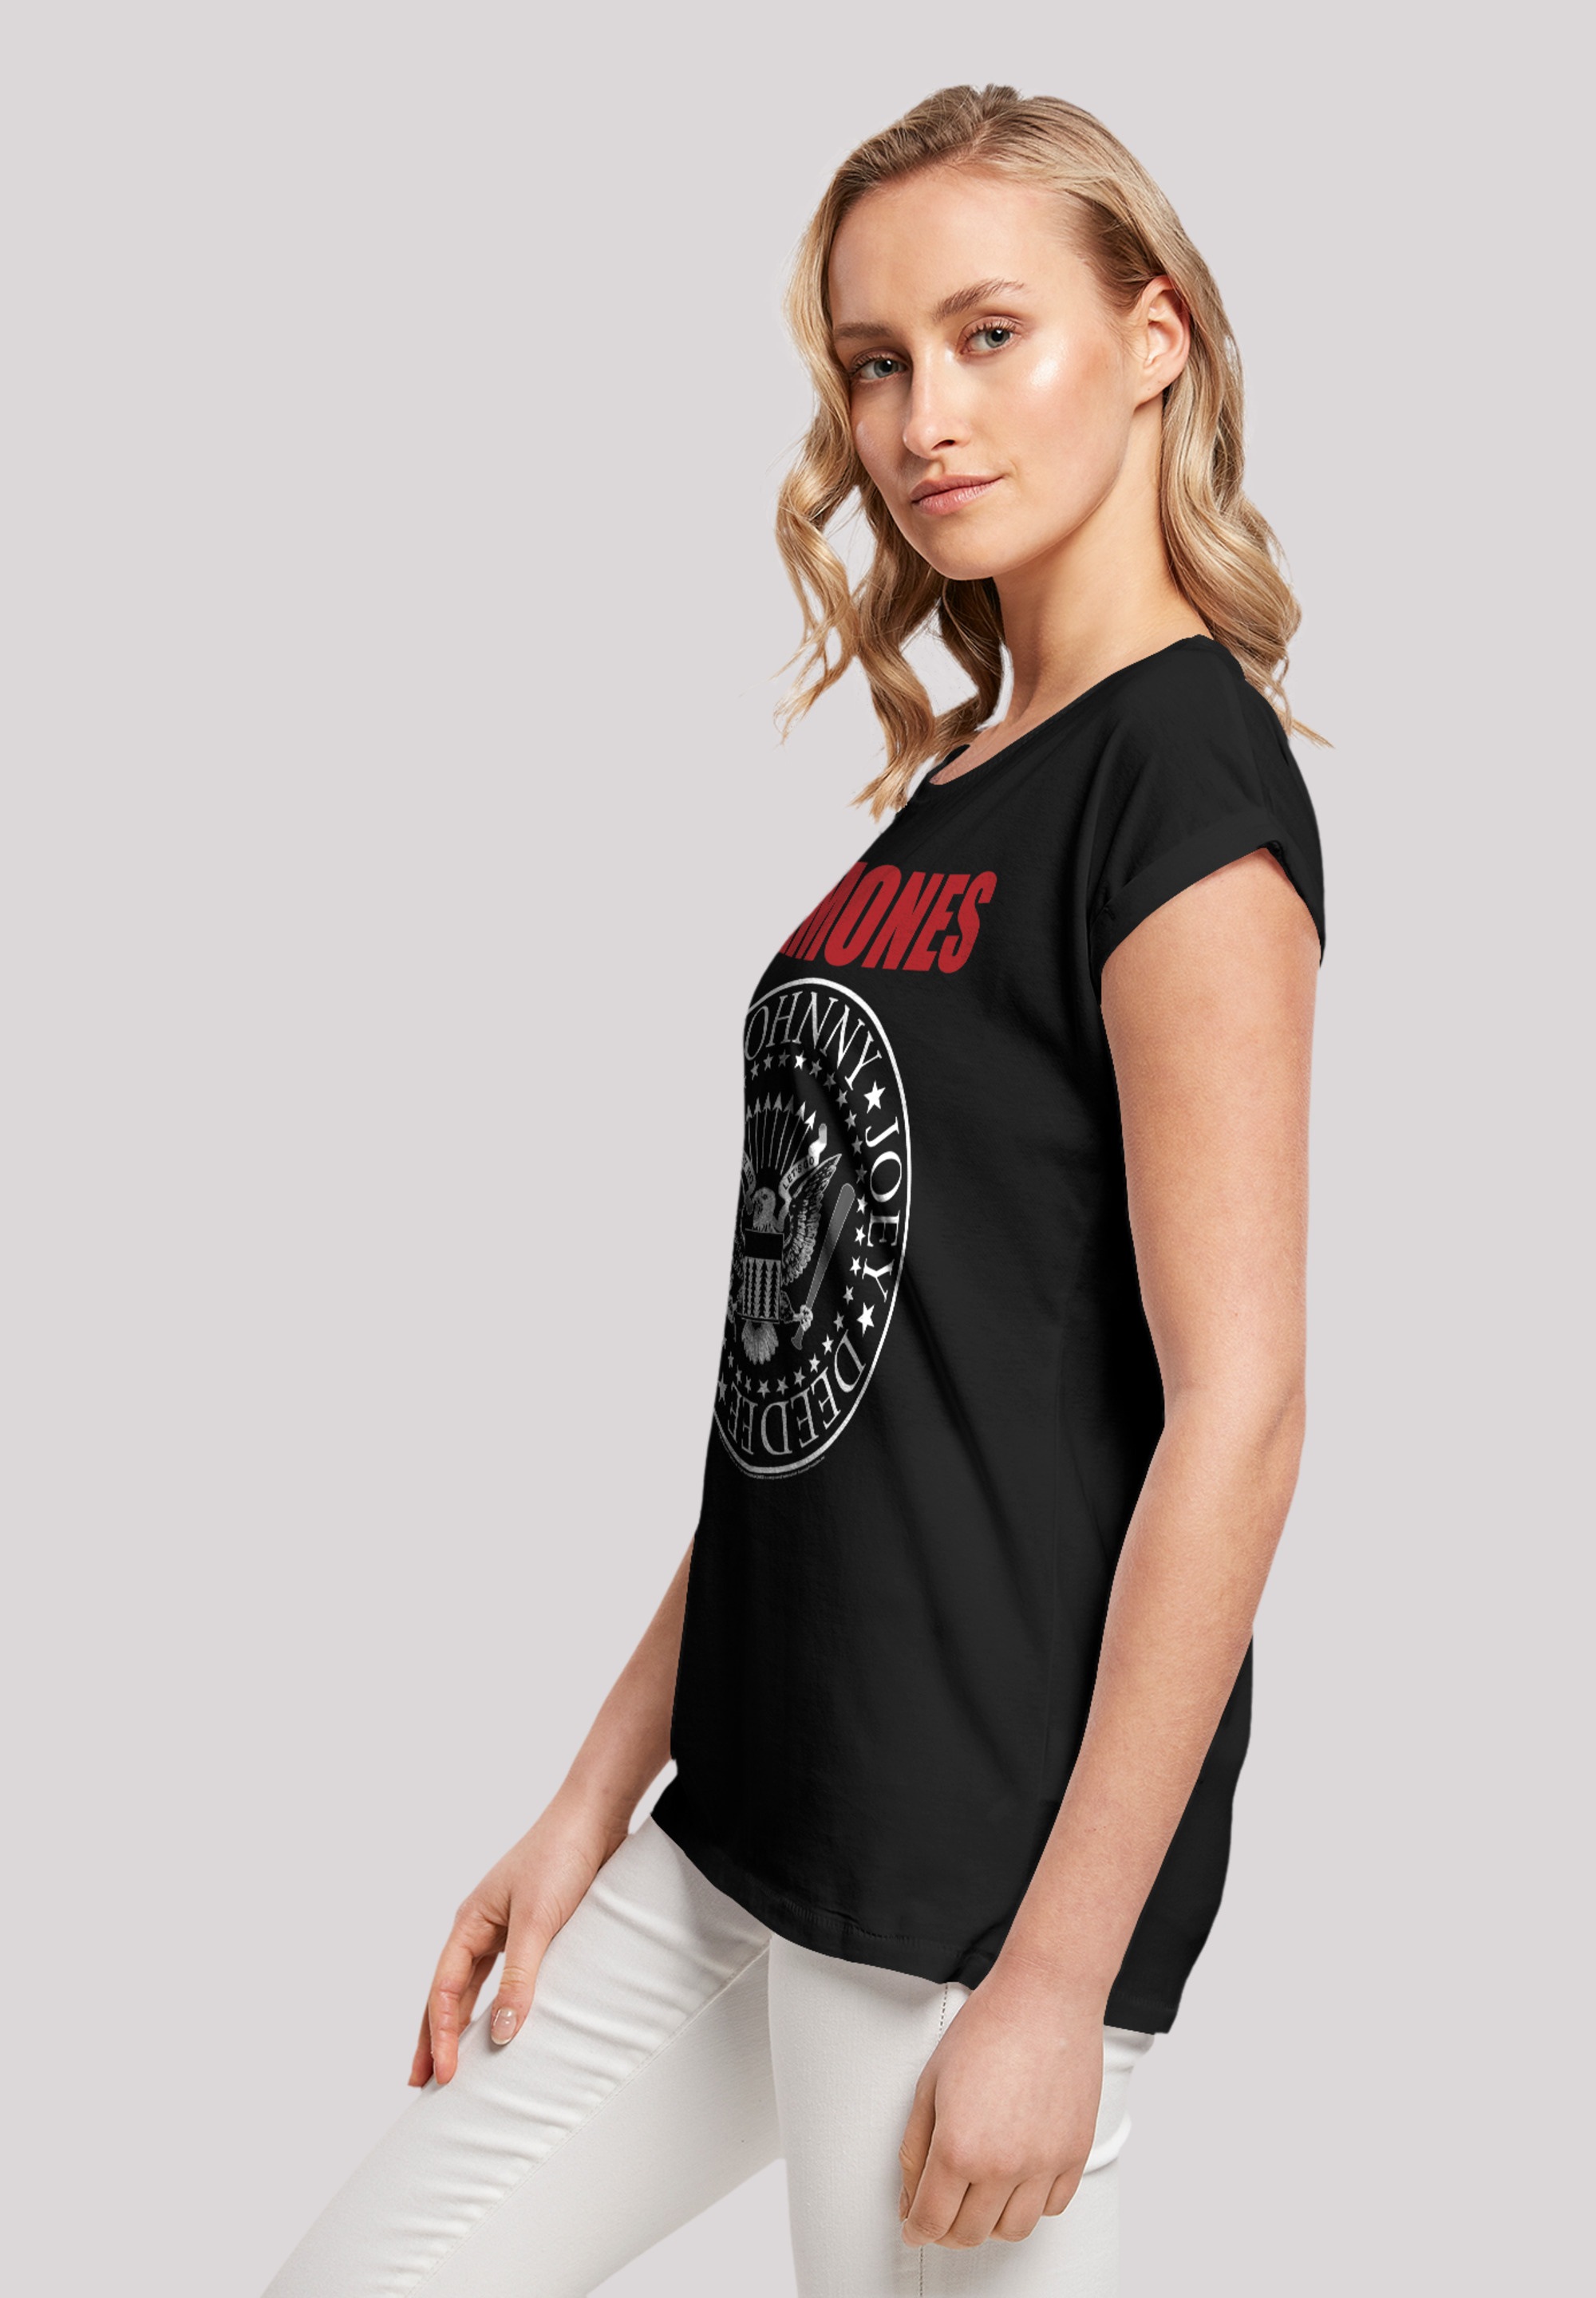 F4NT4STIC T-Shirt »Ramones Rock Musik Band Red Text Seal«, Premium Qualität,  Band, Rock-Musik online kaufen | I'm walking